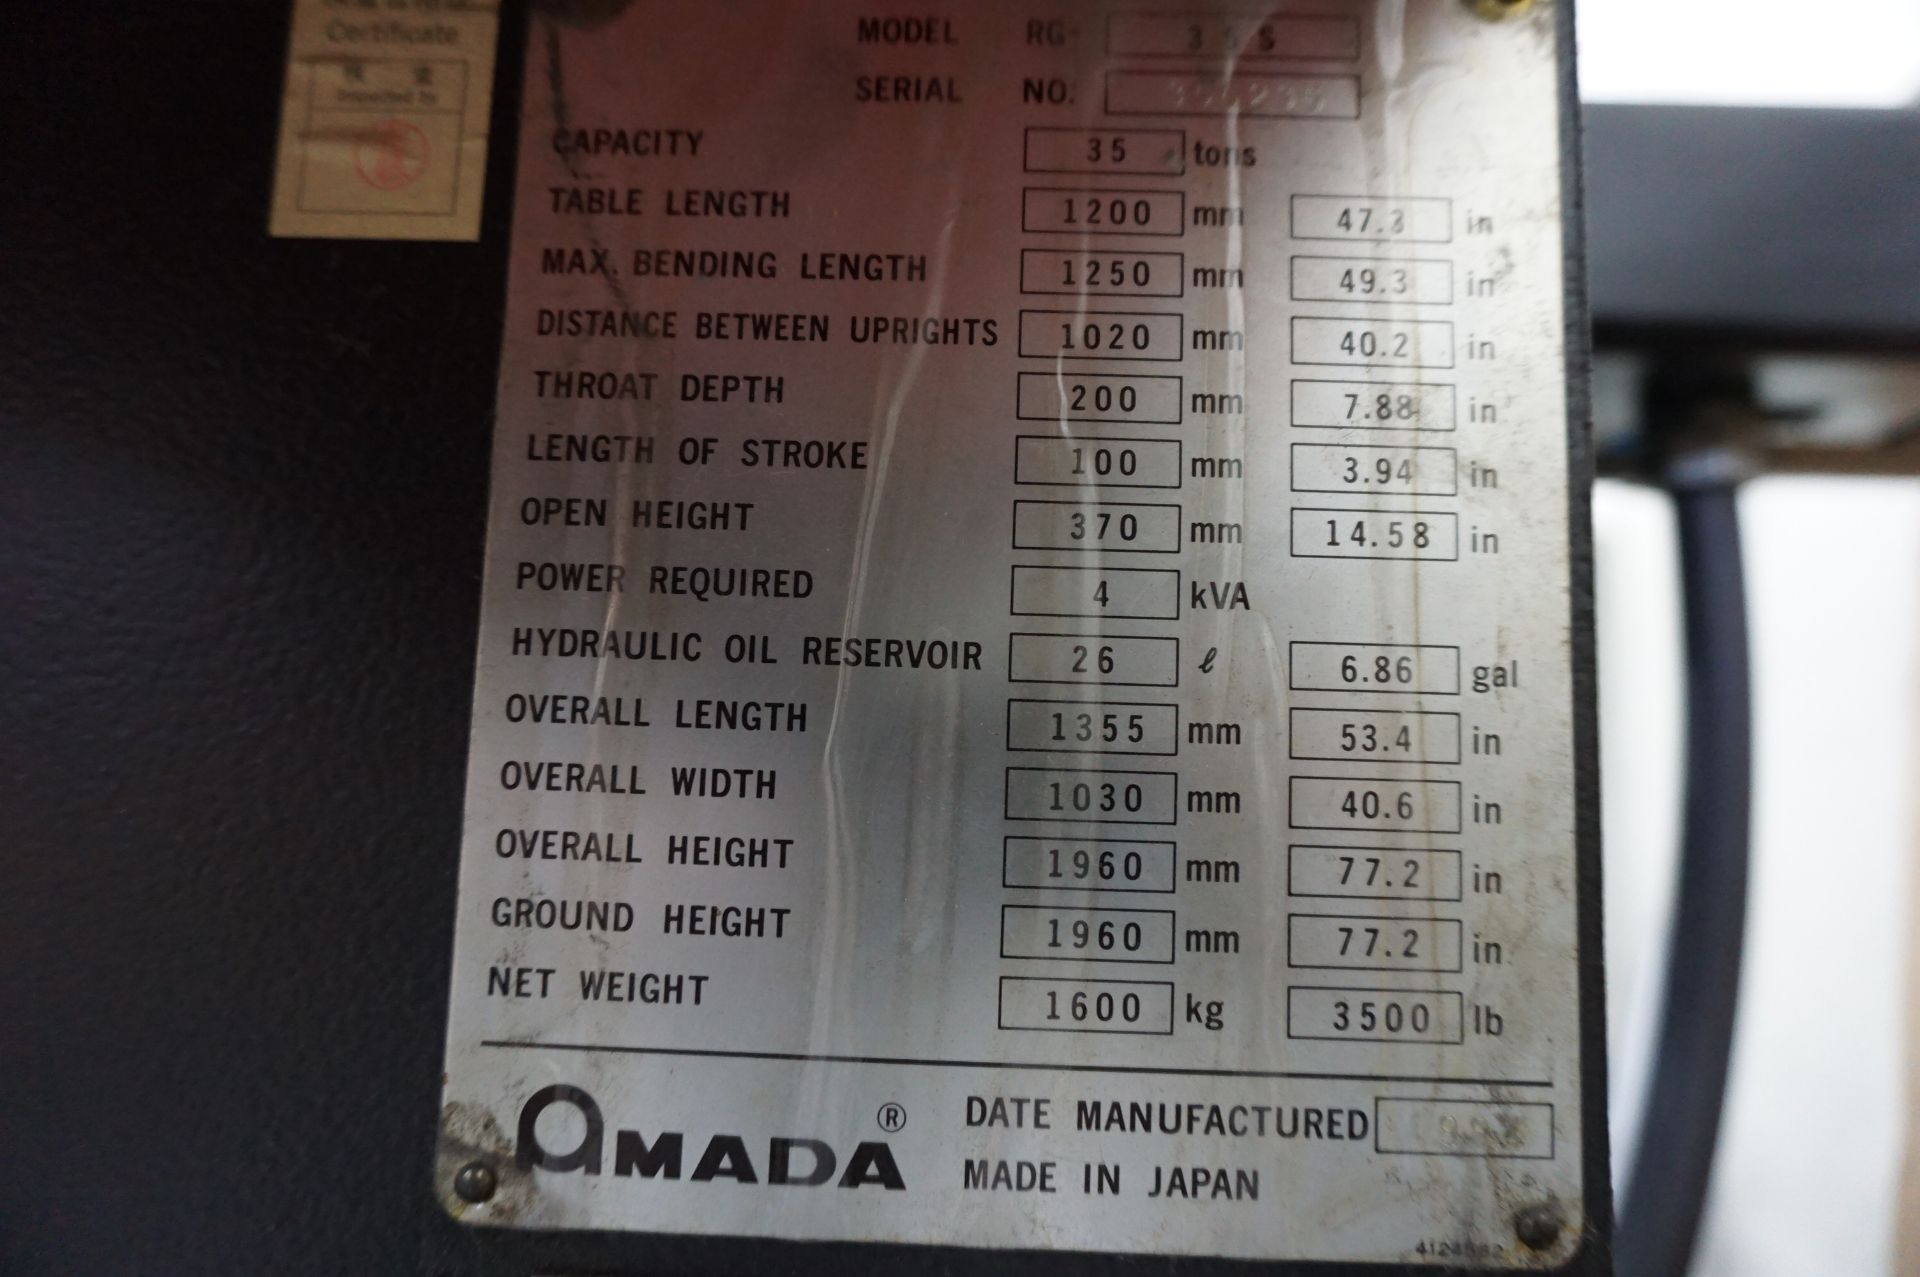 1994 AMADA RG-35S PRESS BRAKE S/N 356236 CAPACITY 35 TONS, TABLE LENGTH 47.3", MAX BENDING LENGTH - Image 11 of 14